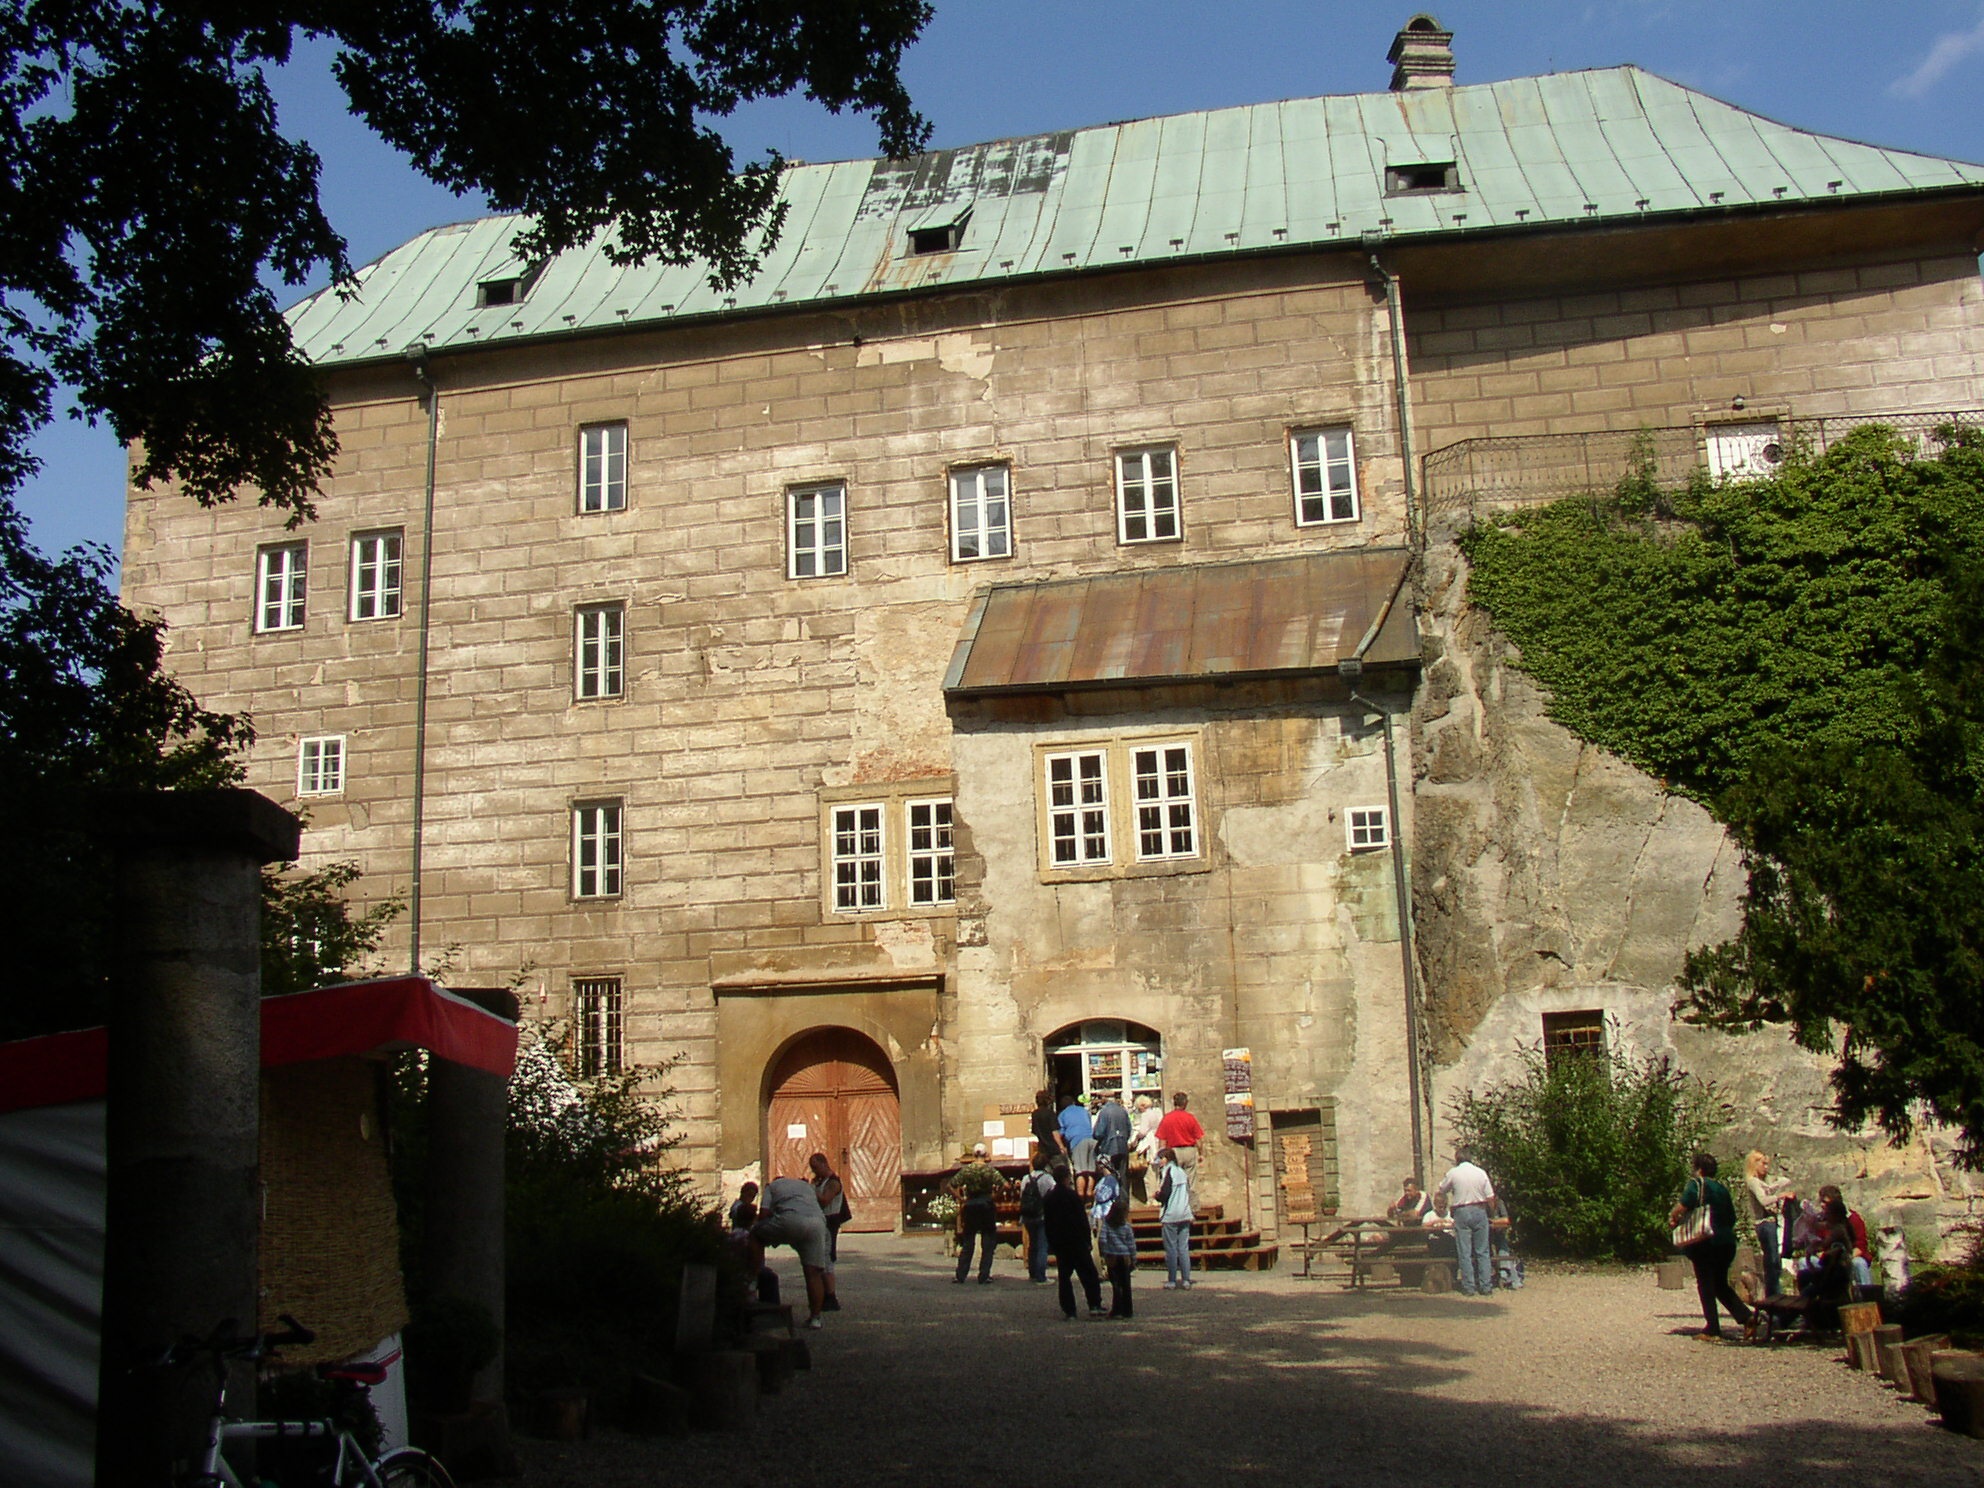 Copy of Front gate entrance to Houska Castle